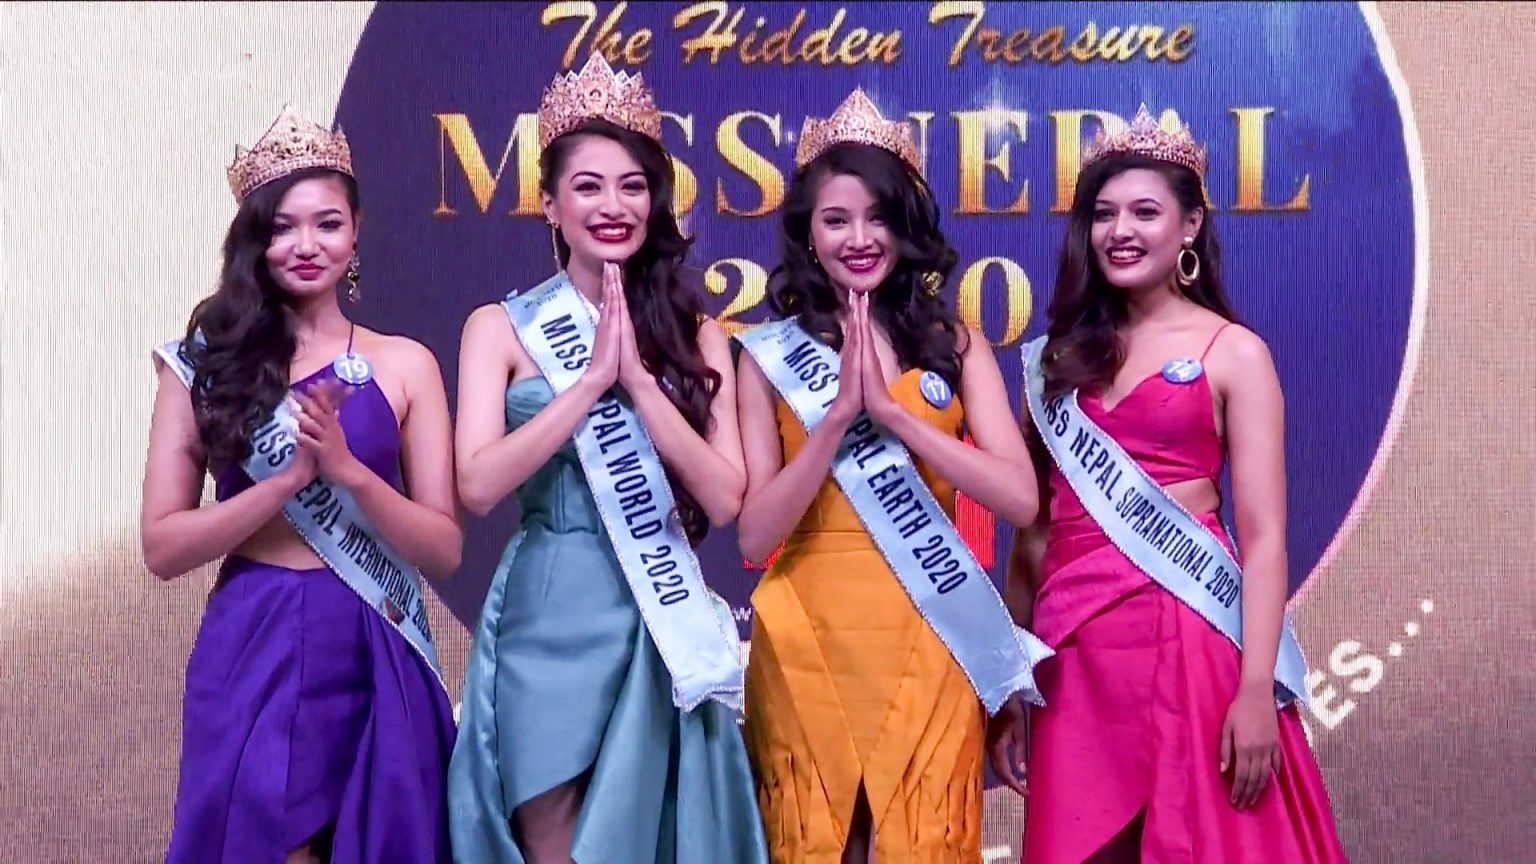 Namrata Shrestha won the title of ‘Miss Nepal World’ Vishwanews